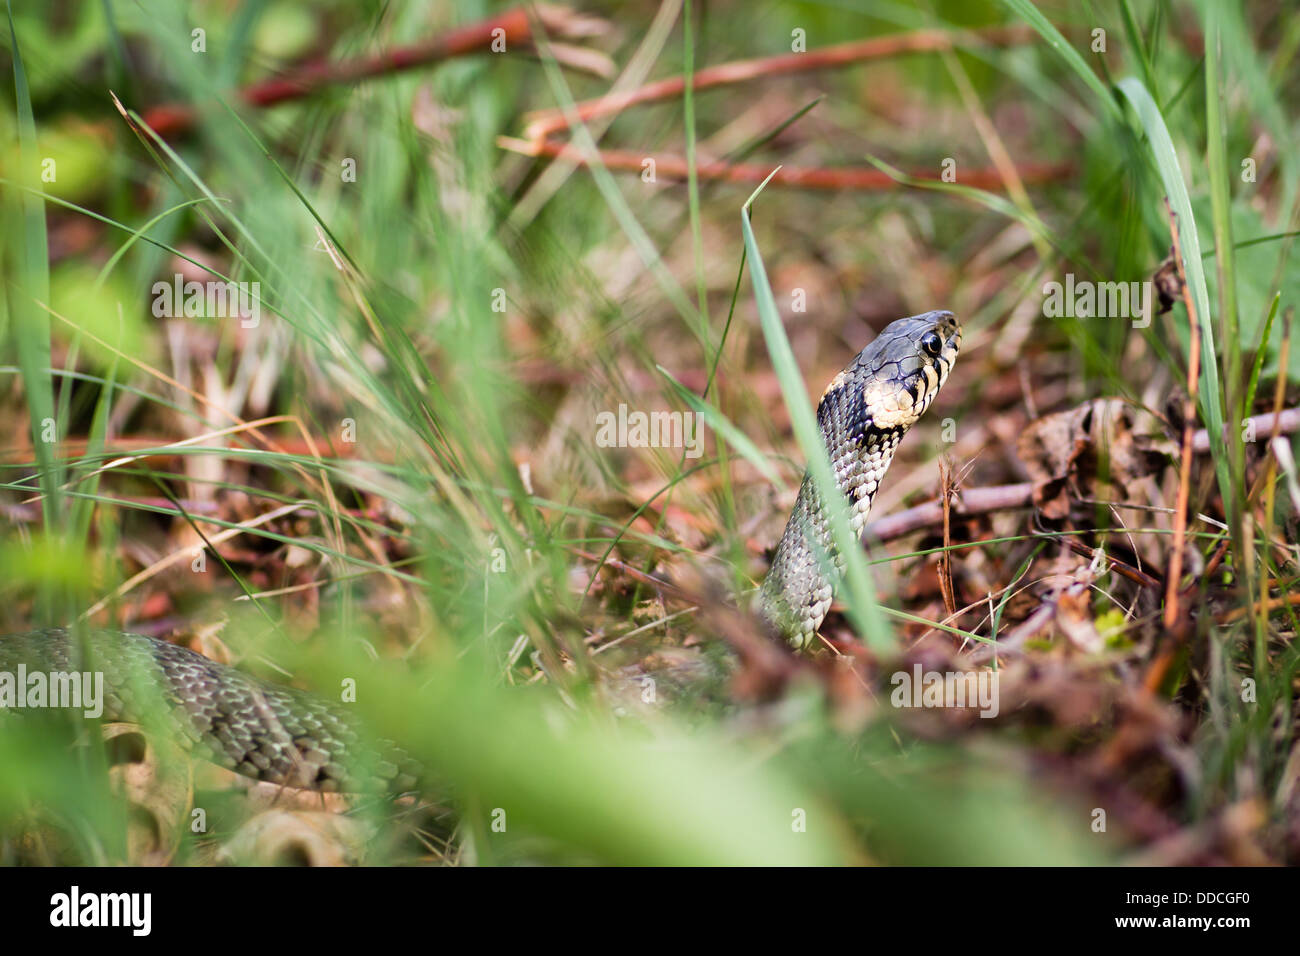 Grass snake (Aka Water snake Natrix Natrix) Stock Photo